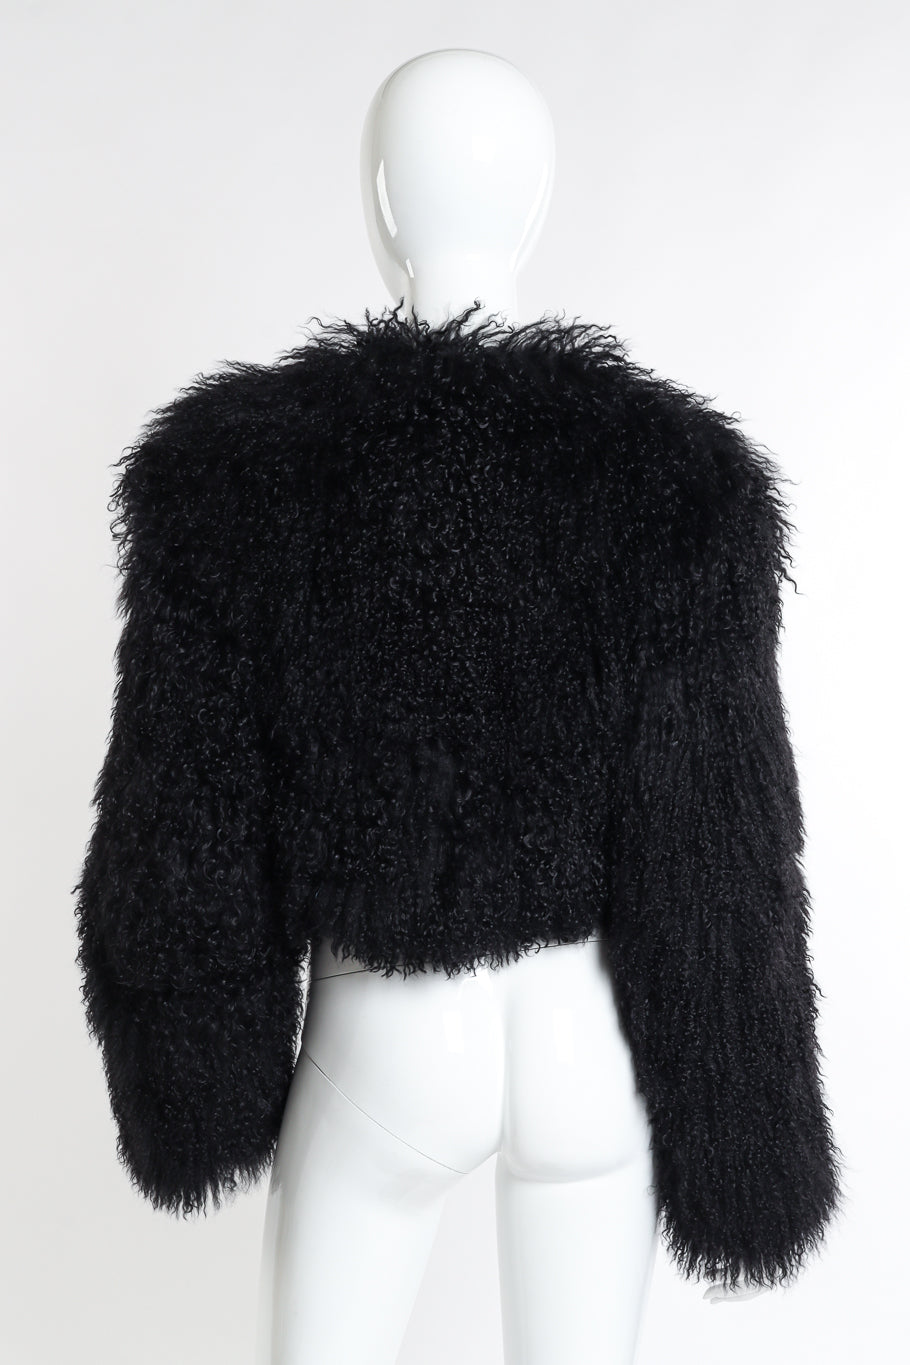 Yves Saint Laurent Mongolian Fur Jacket back on mannequin @recessla